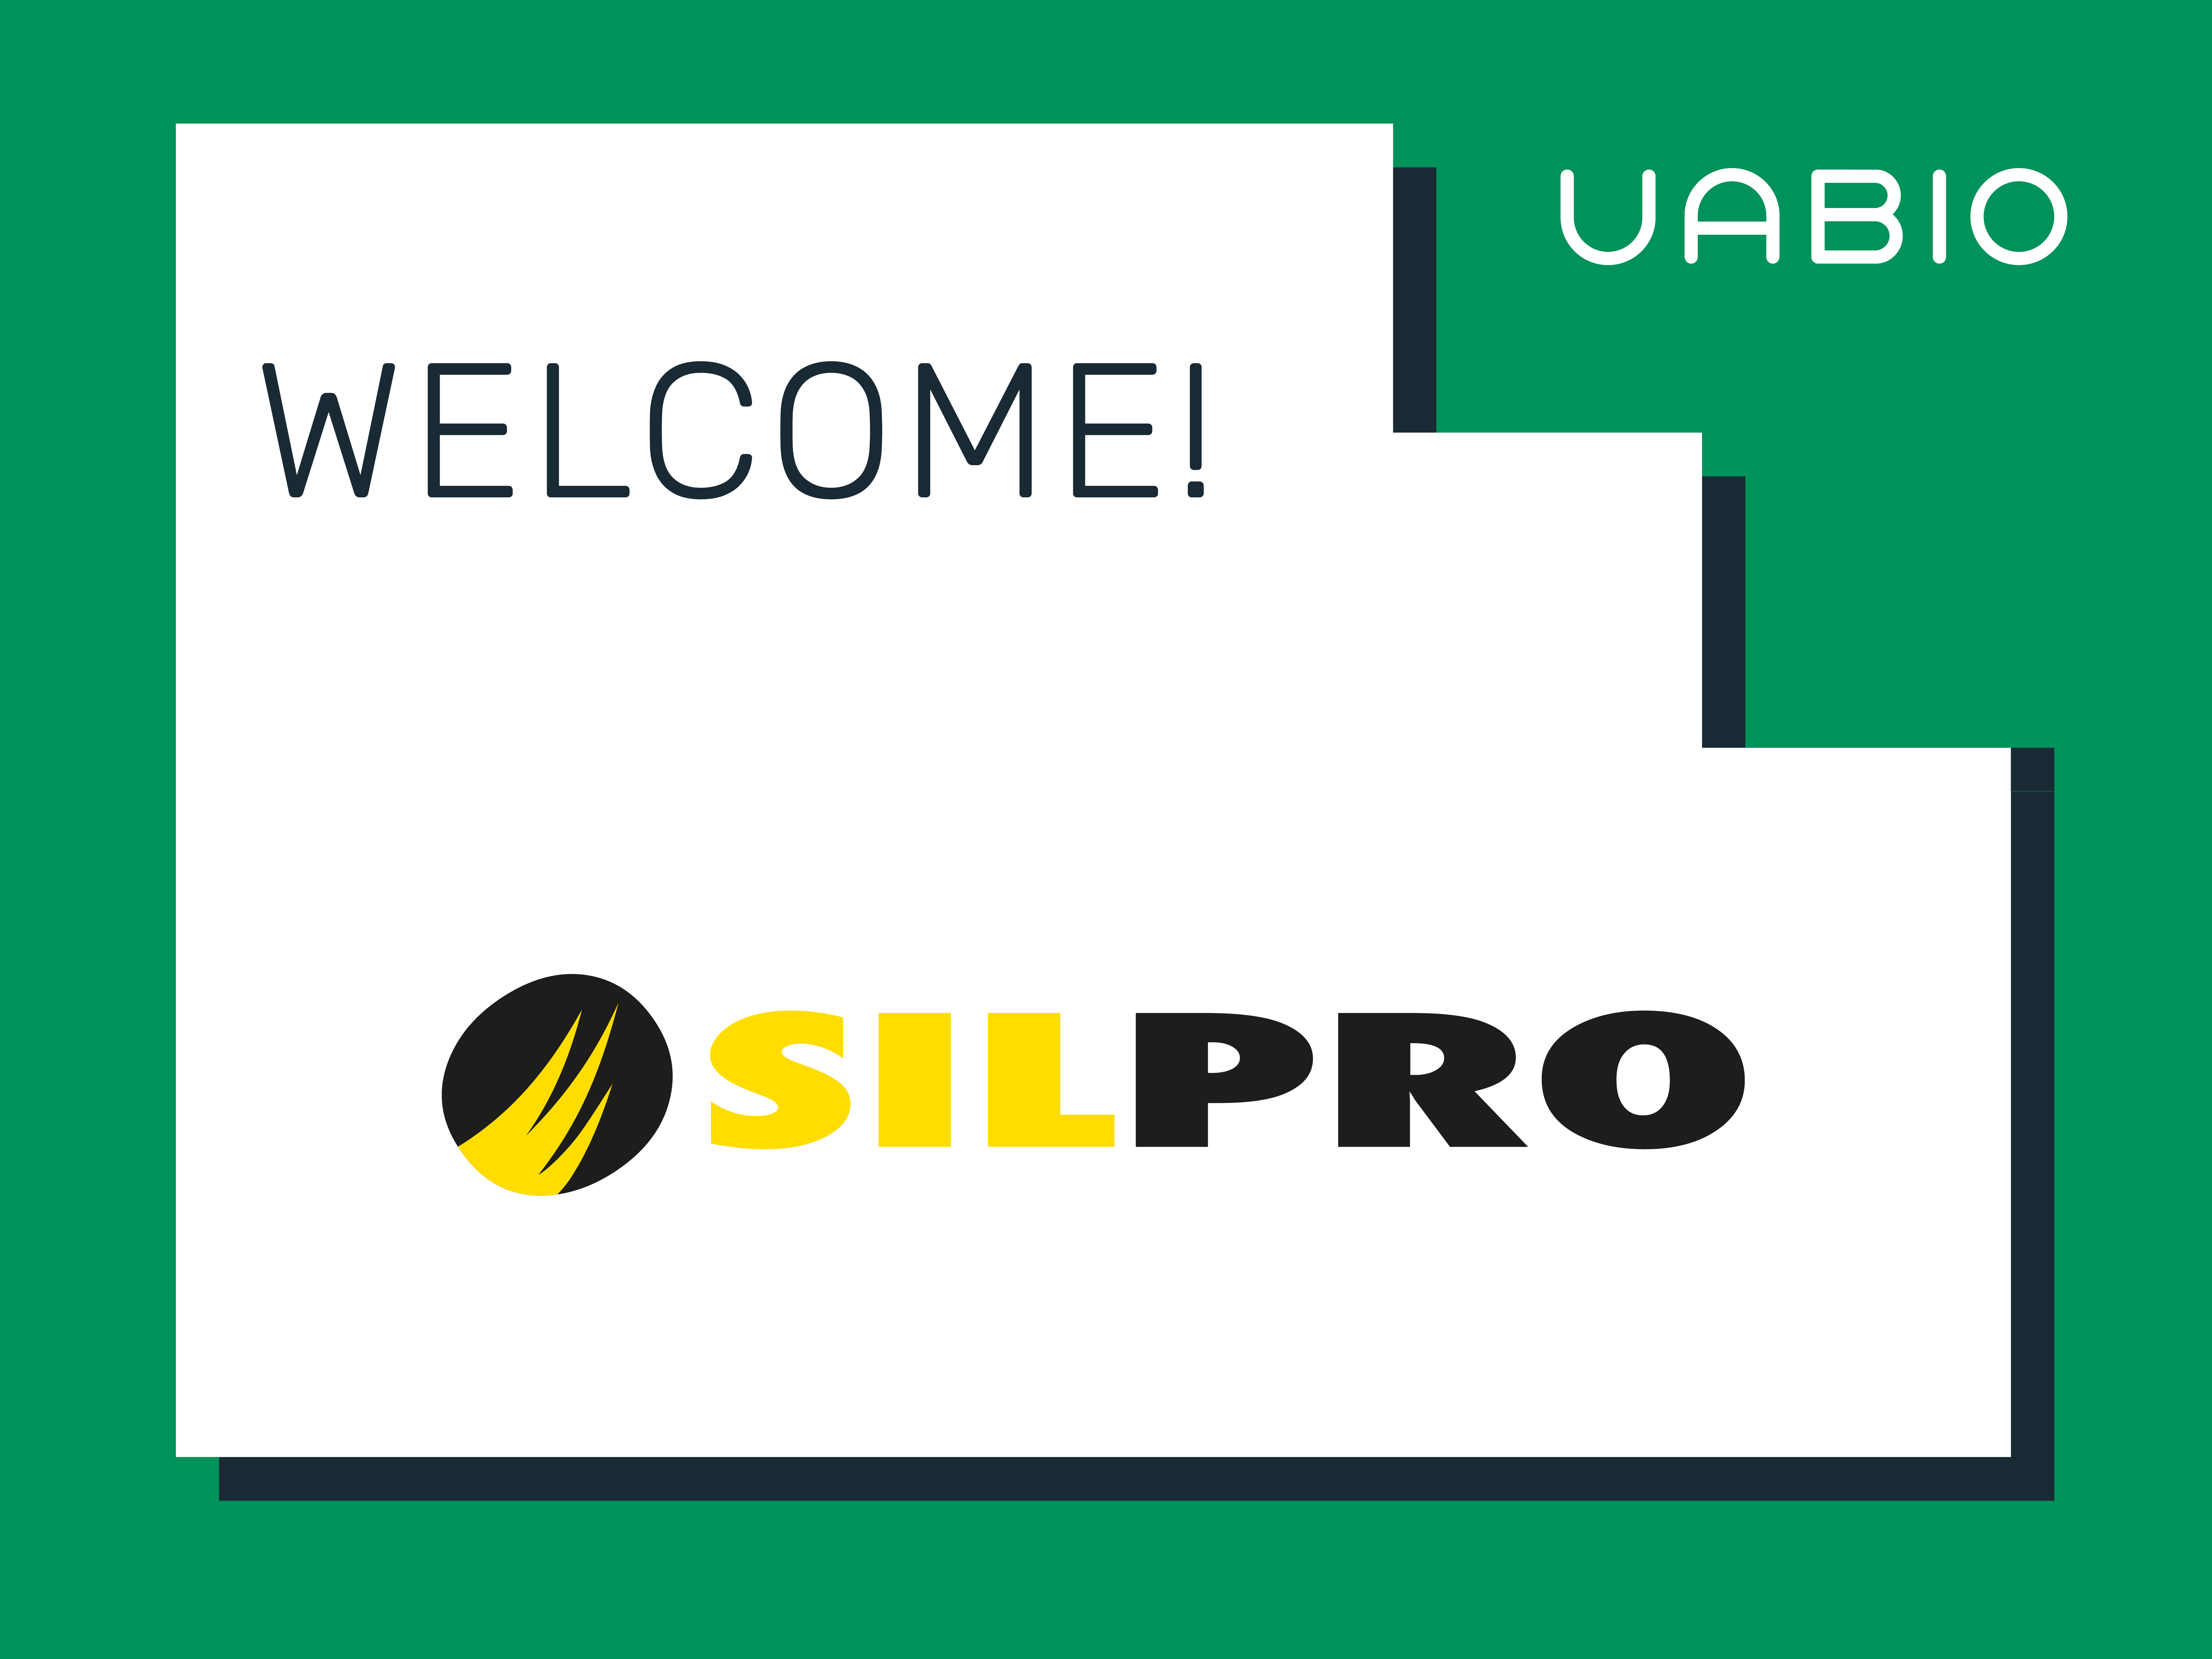 New UABIO member Silpro company!